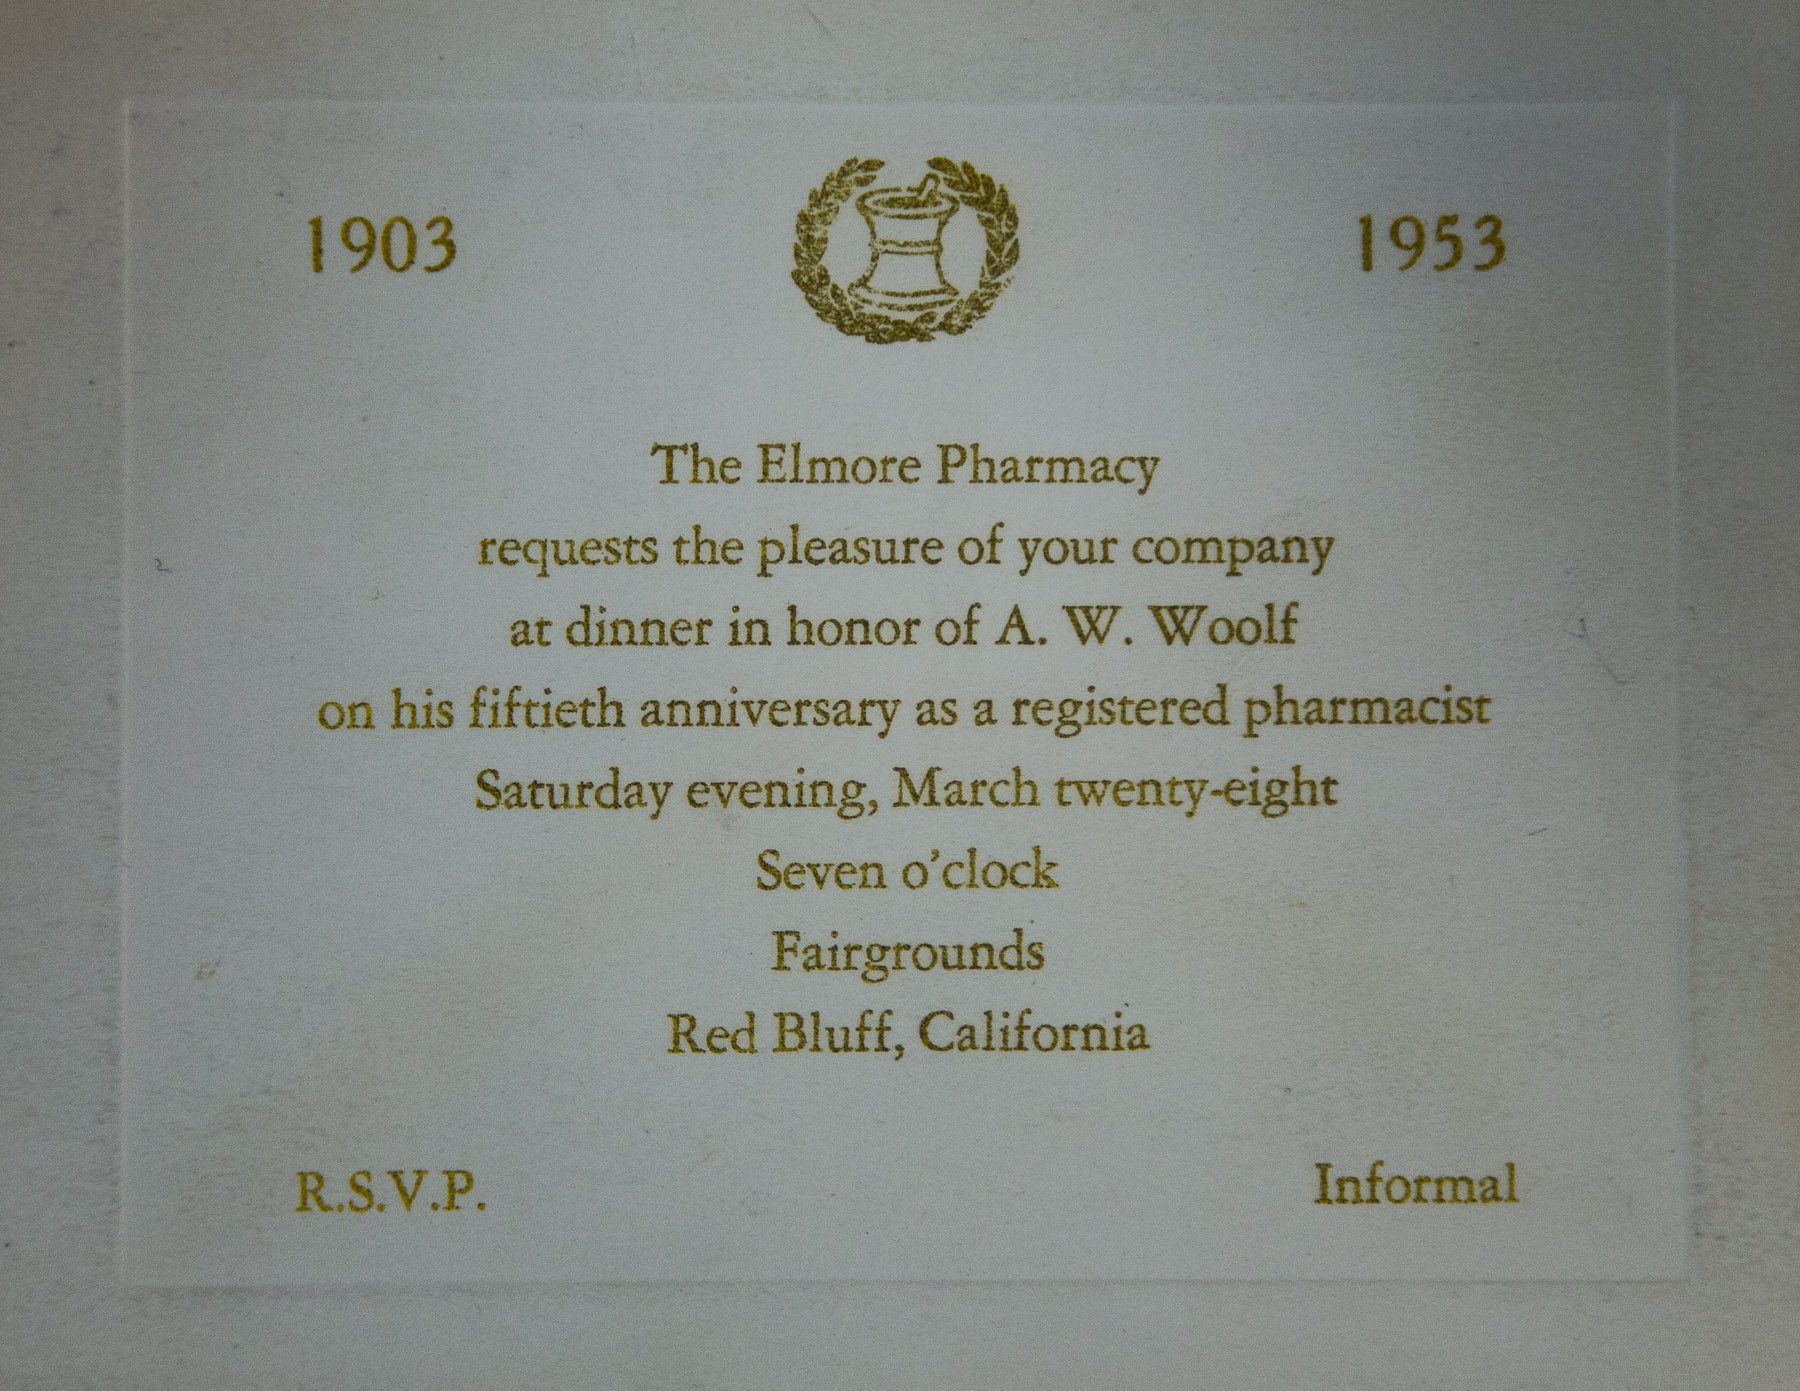 Elmore Pharmacy A. W. Woolf 50th Anniversary as a Pharmacist